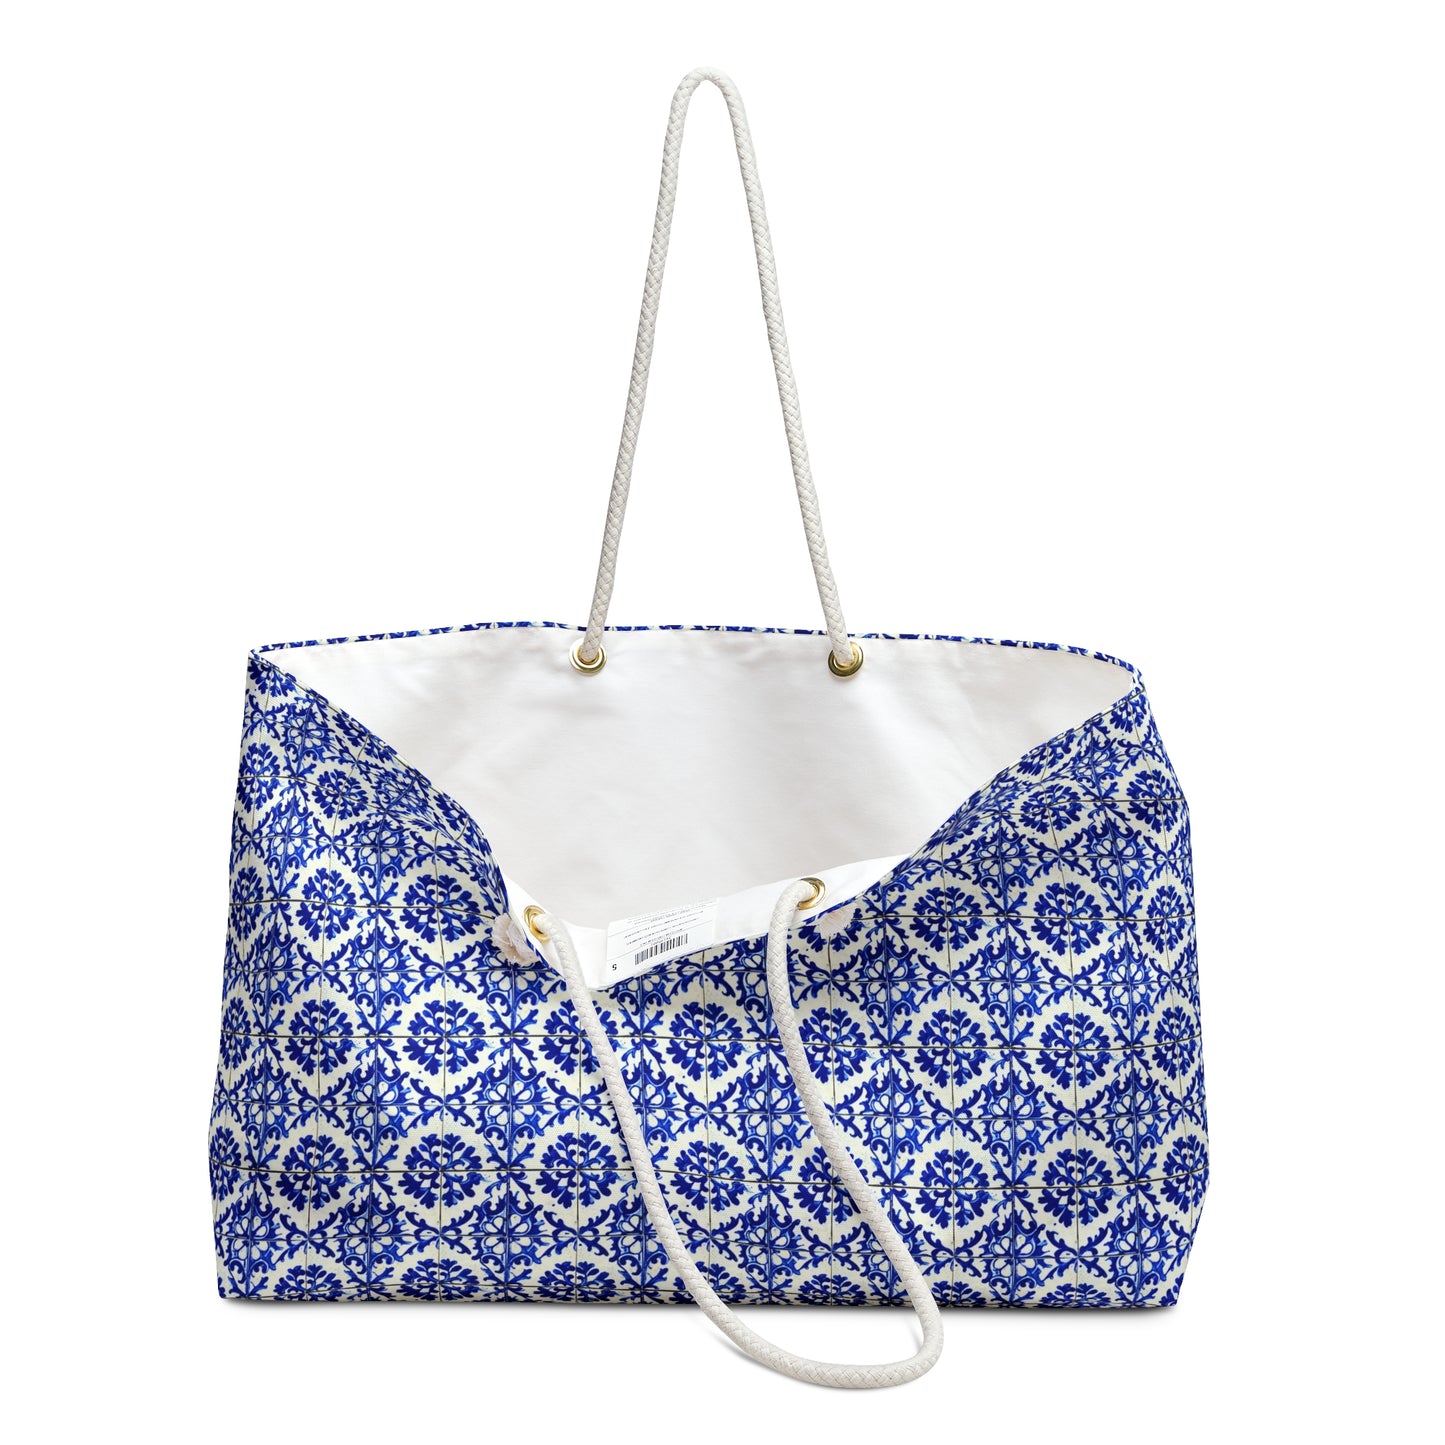 Portuguese Summer Blue and White Floral Antique Tile Shopper Market  Beach Weekender Bag